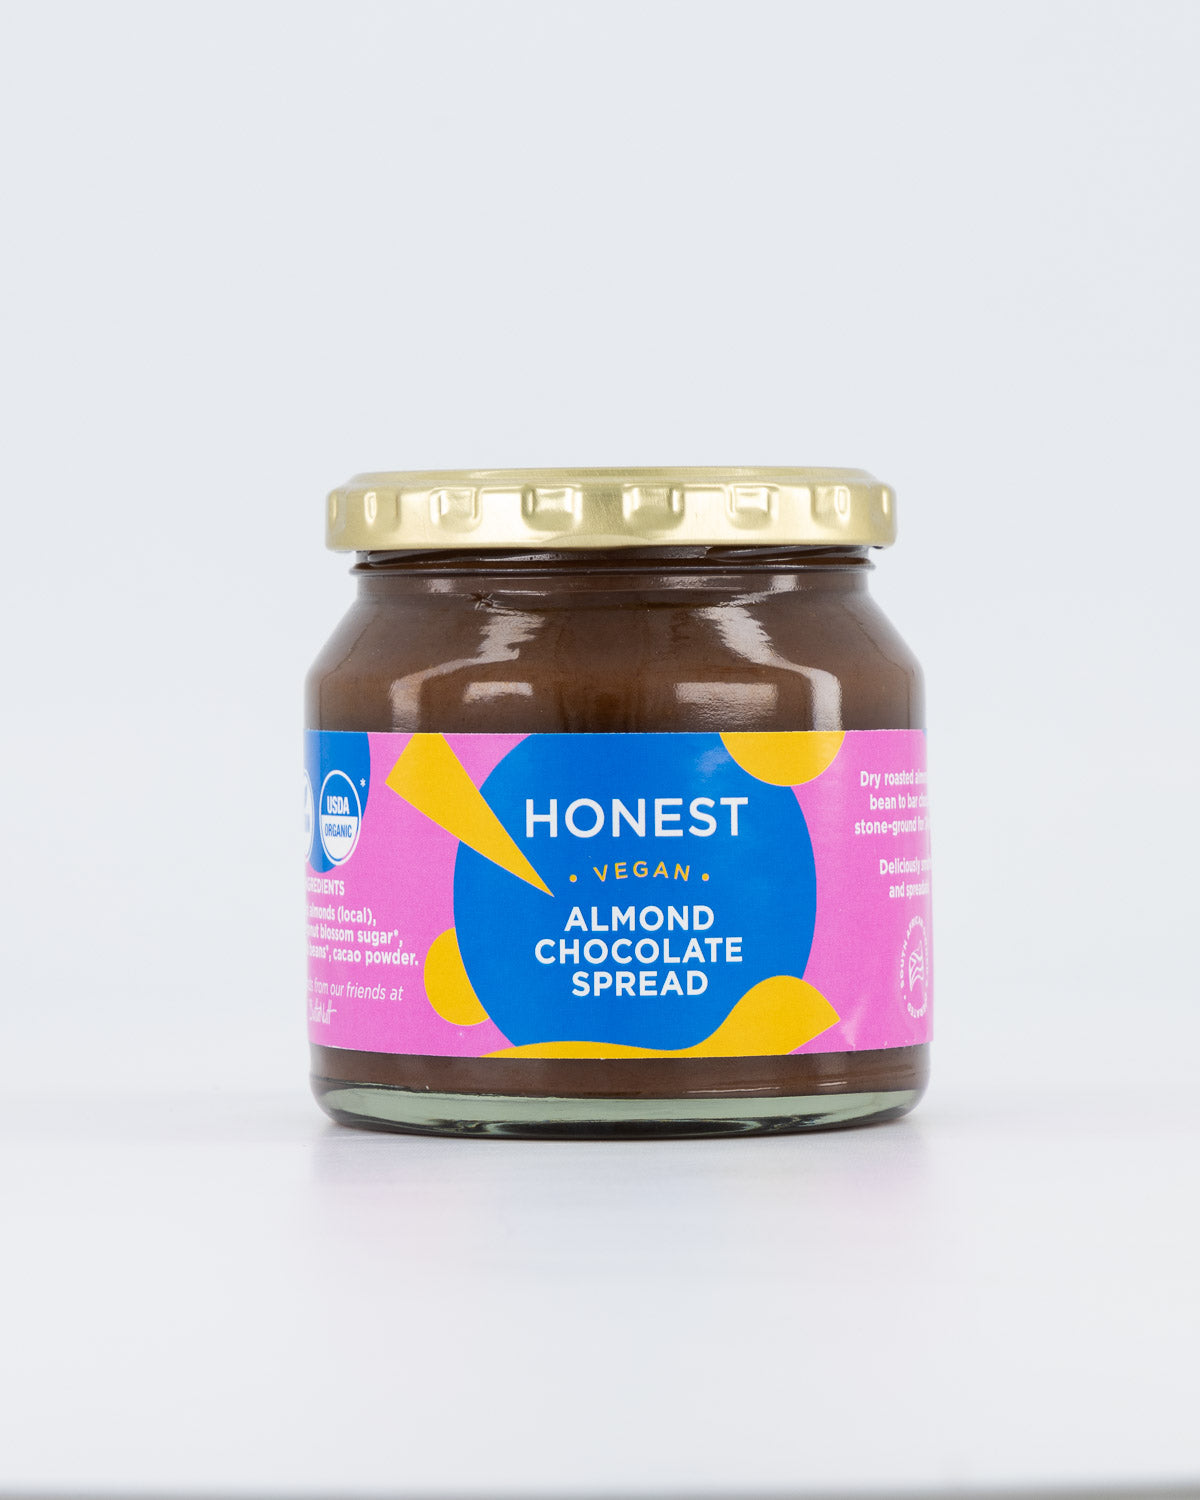 Honest Chocolate - Vegan almond chocolate spread